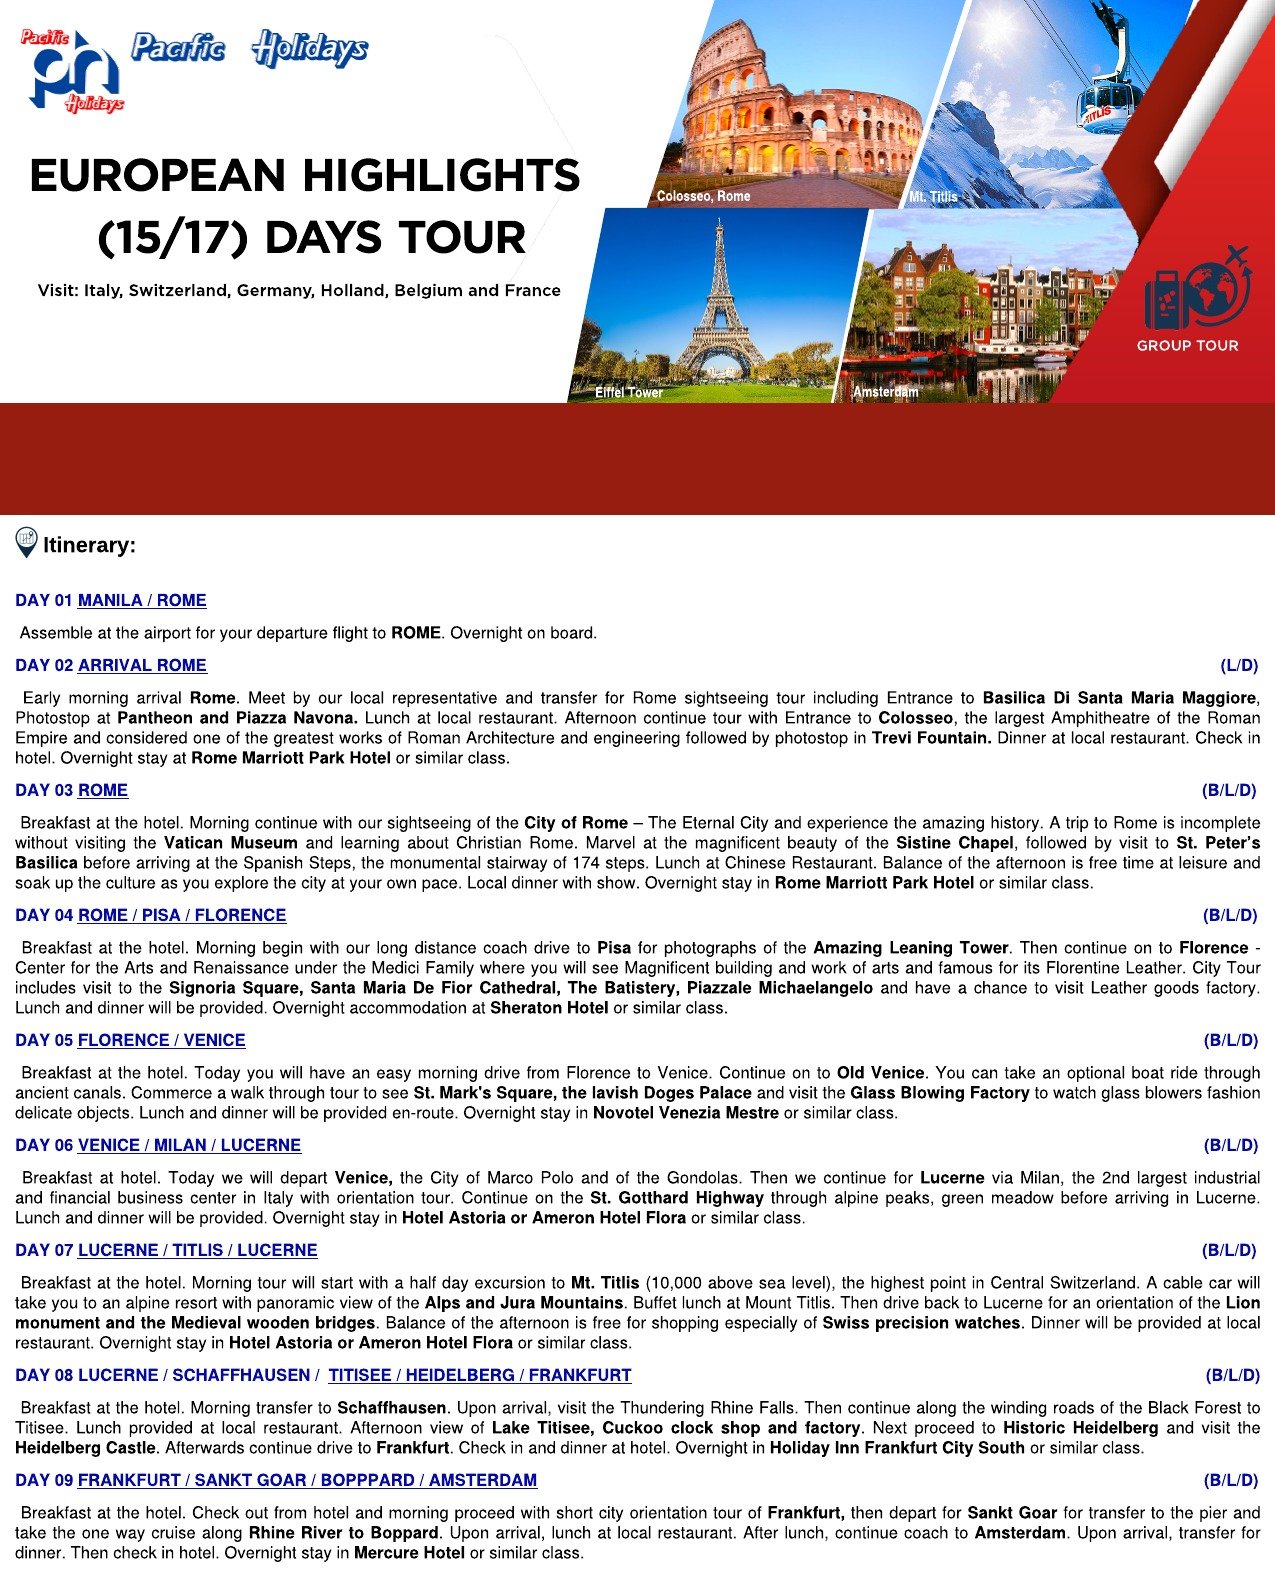 European Highlights 15/17 Days Tour – Pan Pacific Travel